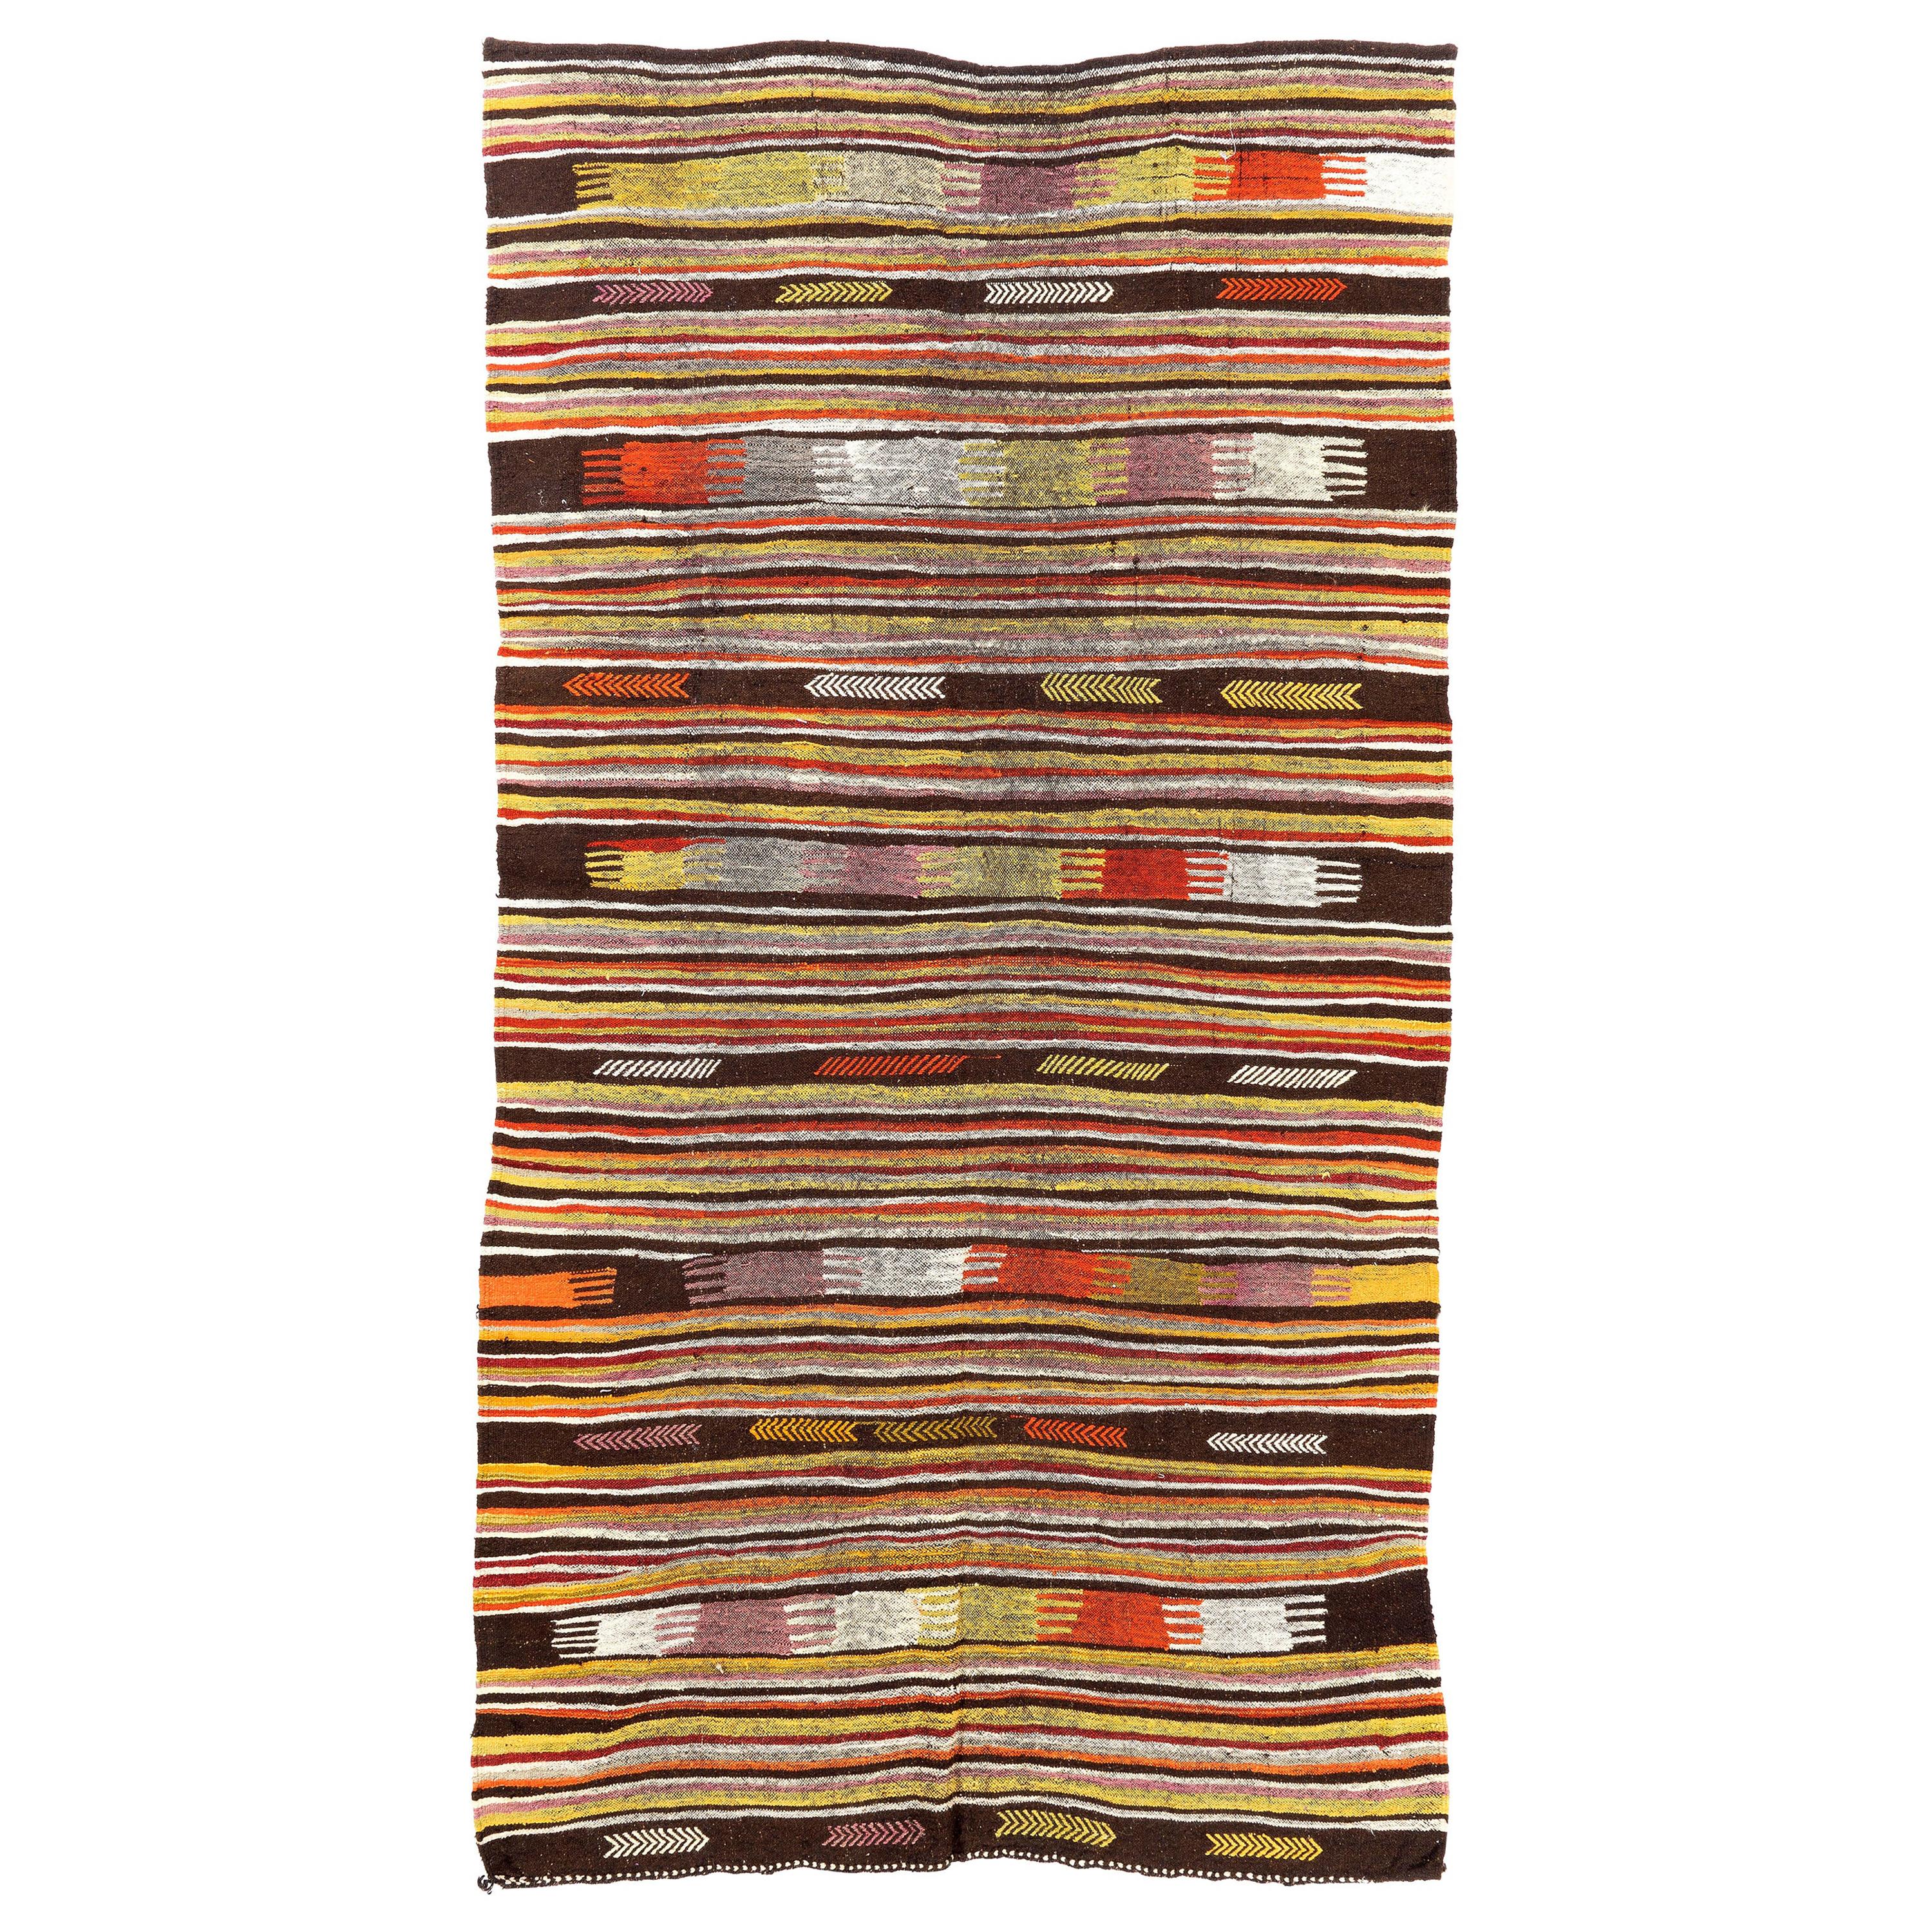 5.3x10 Ft Colorful Nomadic Vintage Hand-Woven Anatolian Kilim Rug, 100% Wool